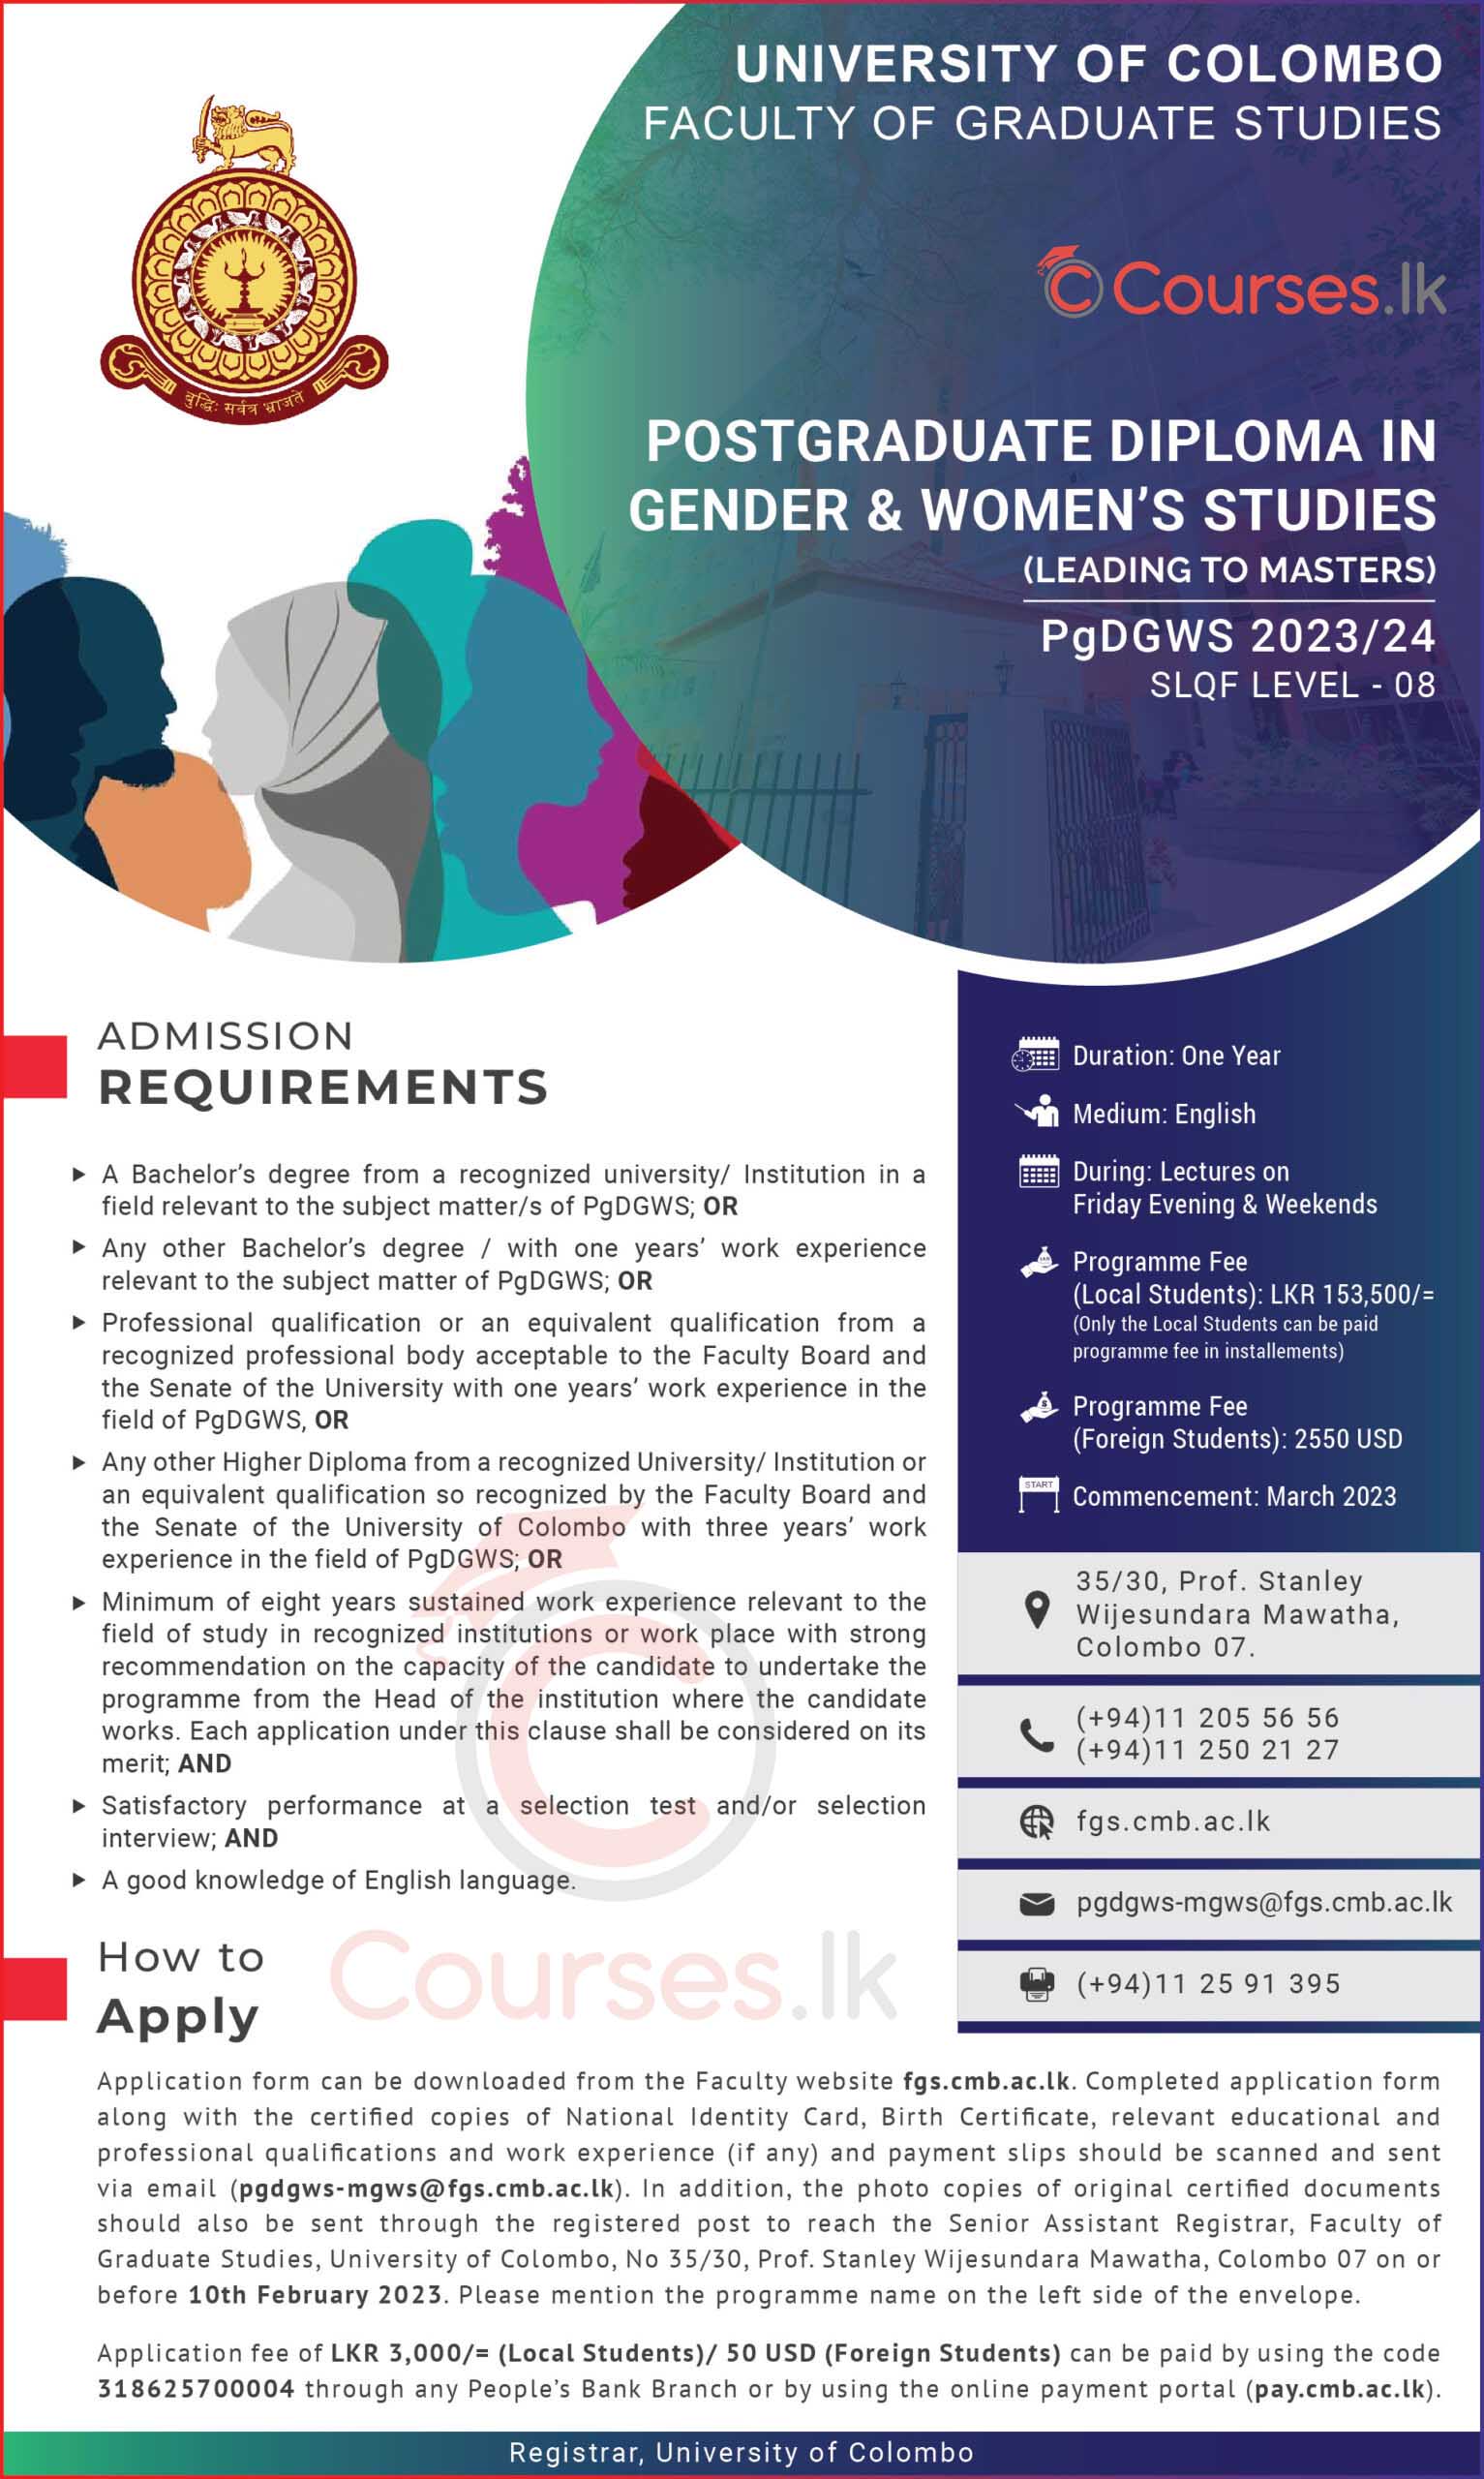 Postgraduate Diploma in Gender & Women’s Studies (PgDGWS) 2023/24 - University of Colombo